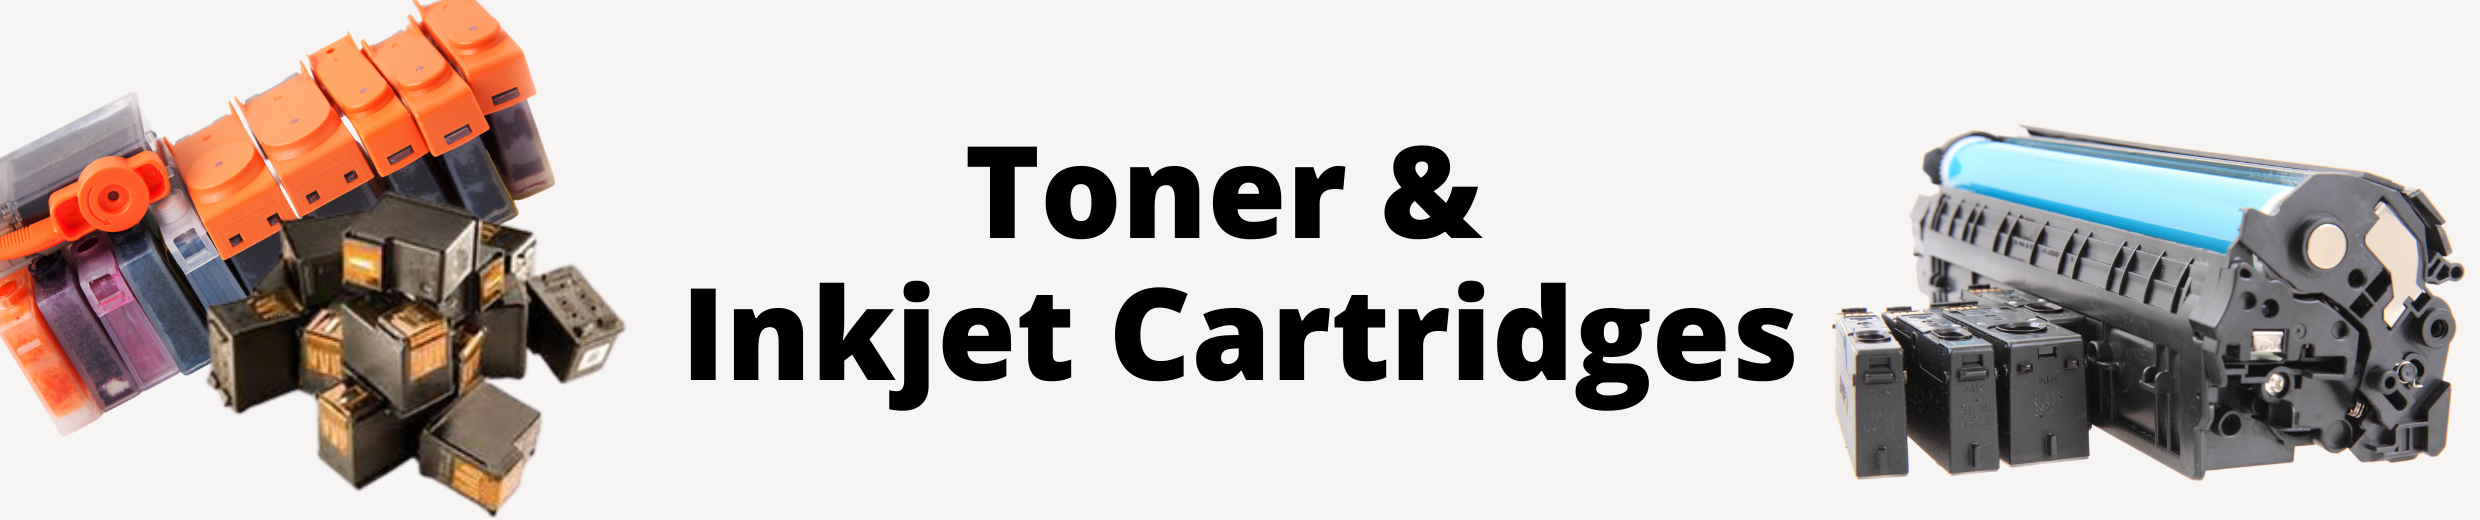 Toner and Inkjet Cartridges